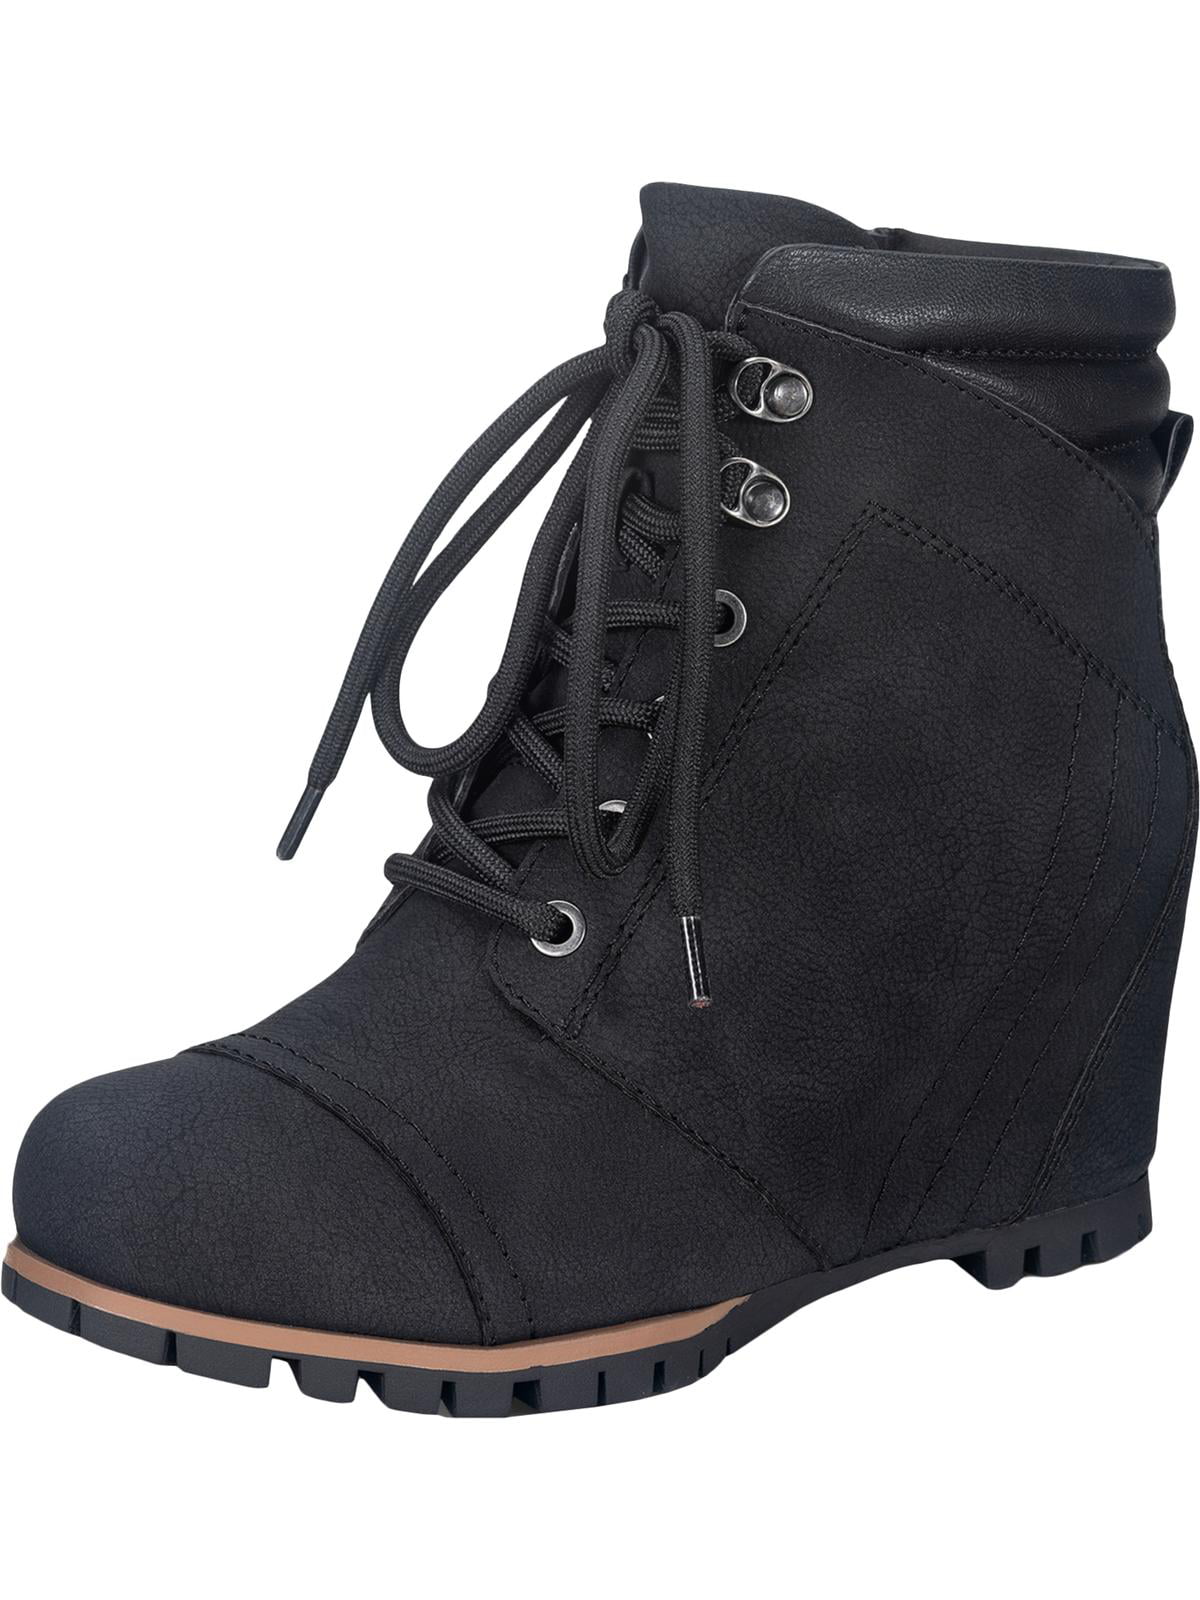 American Rag New Coreene Black Womens Shoes Size 5.5 M Boots MSRP $79.99 